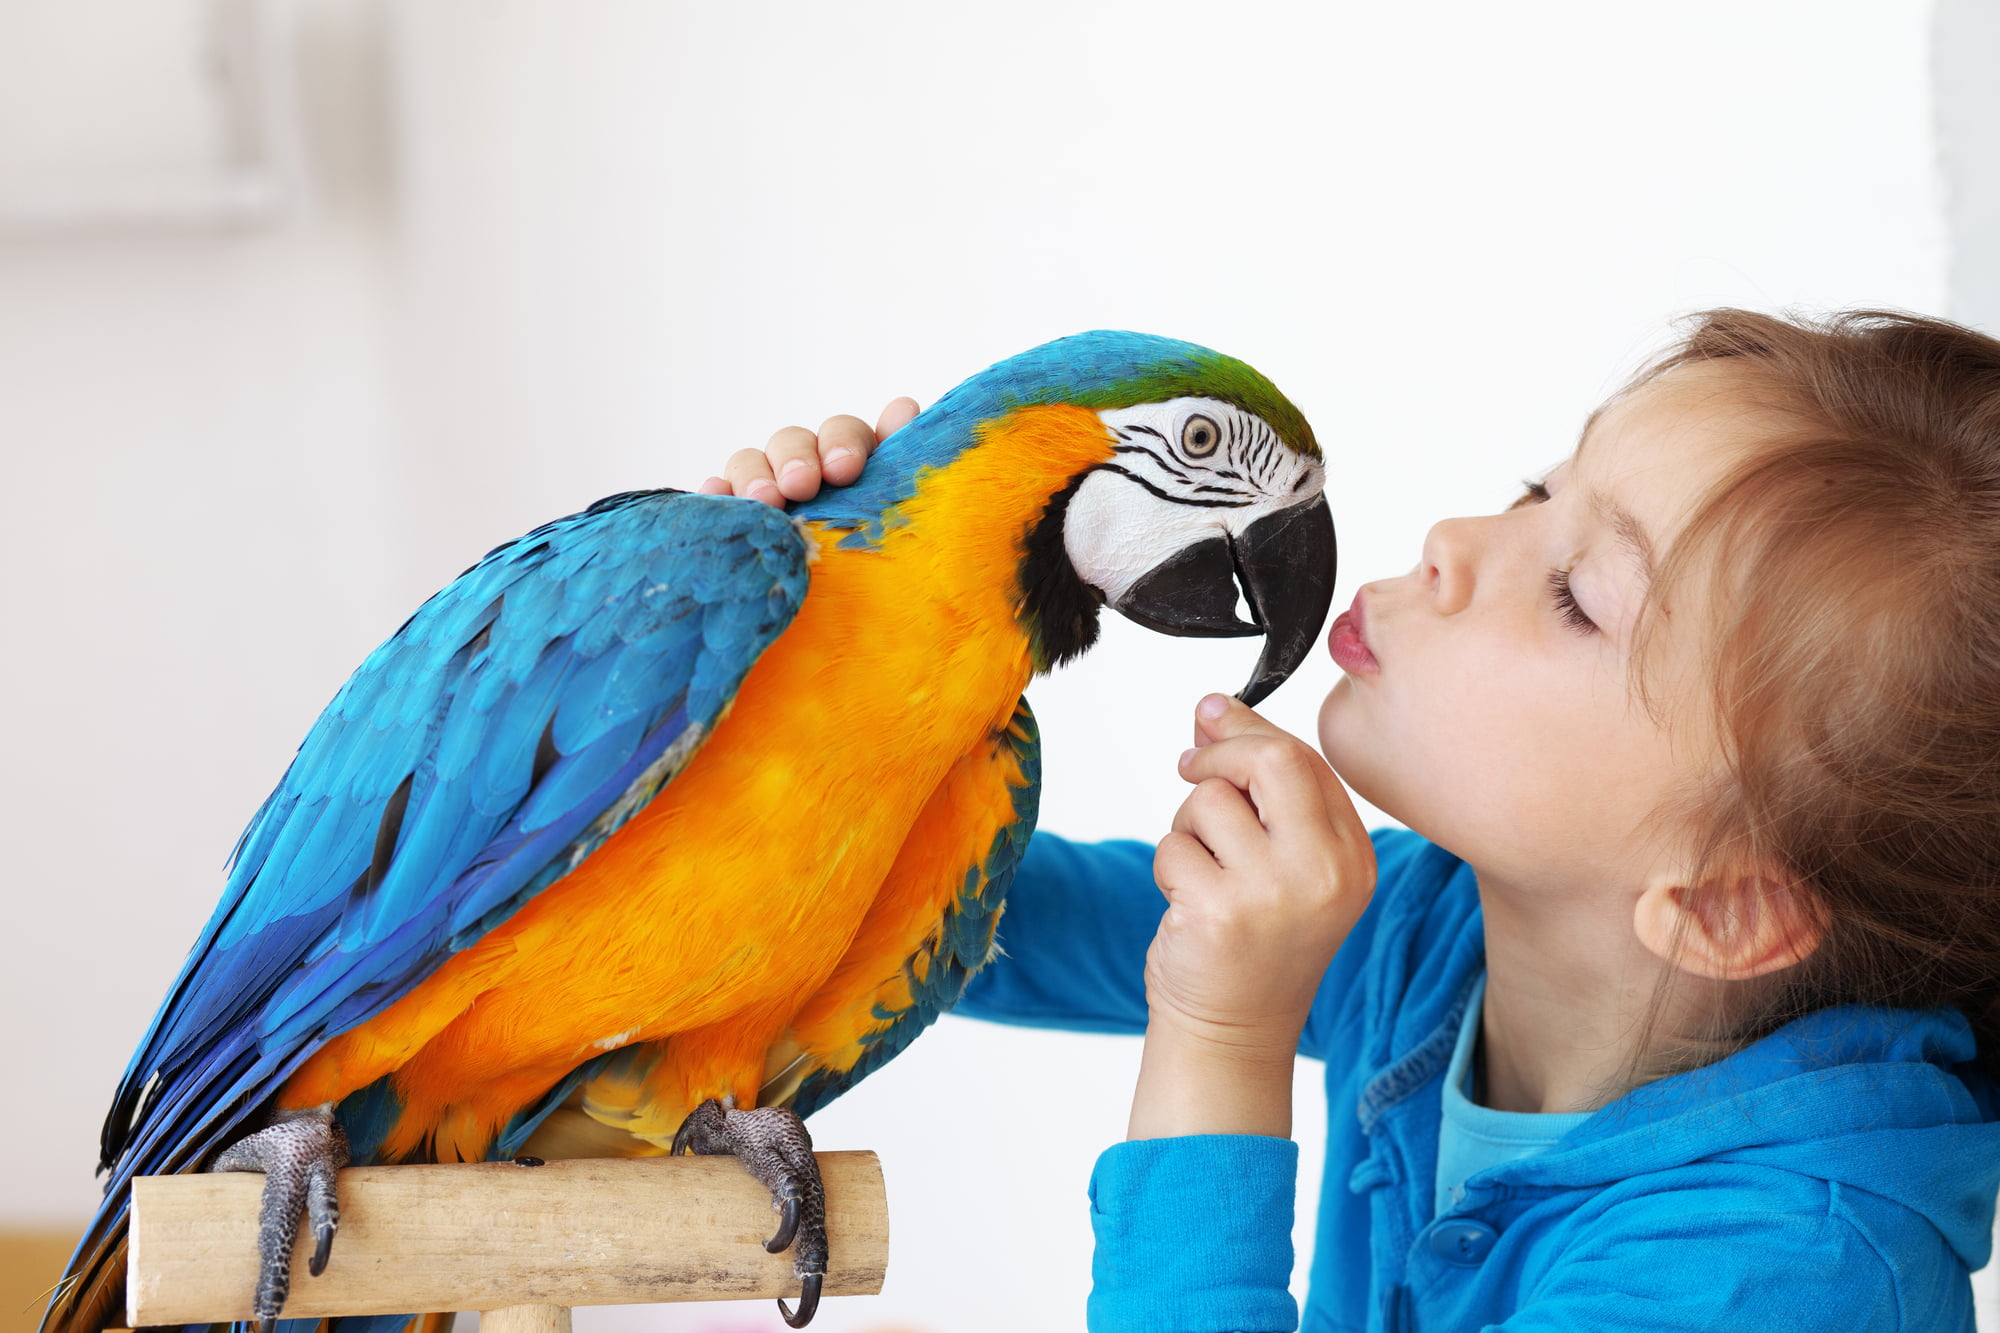 Почему попугаи говорят